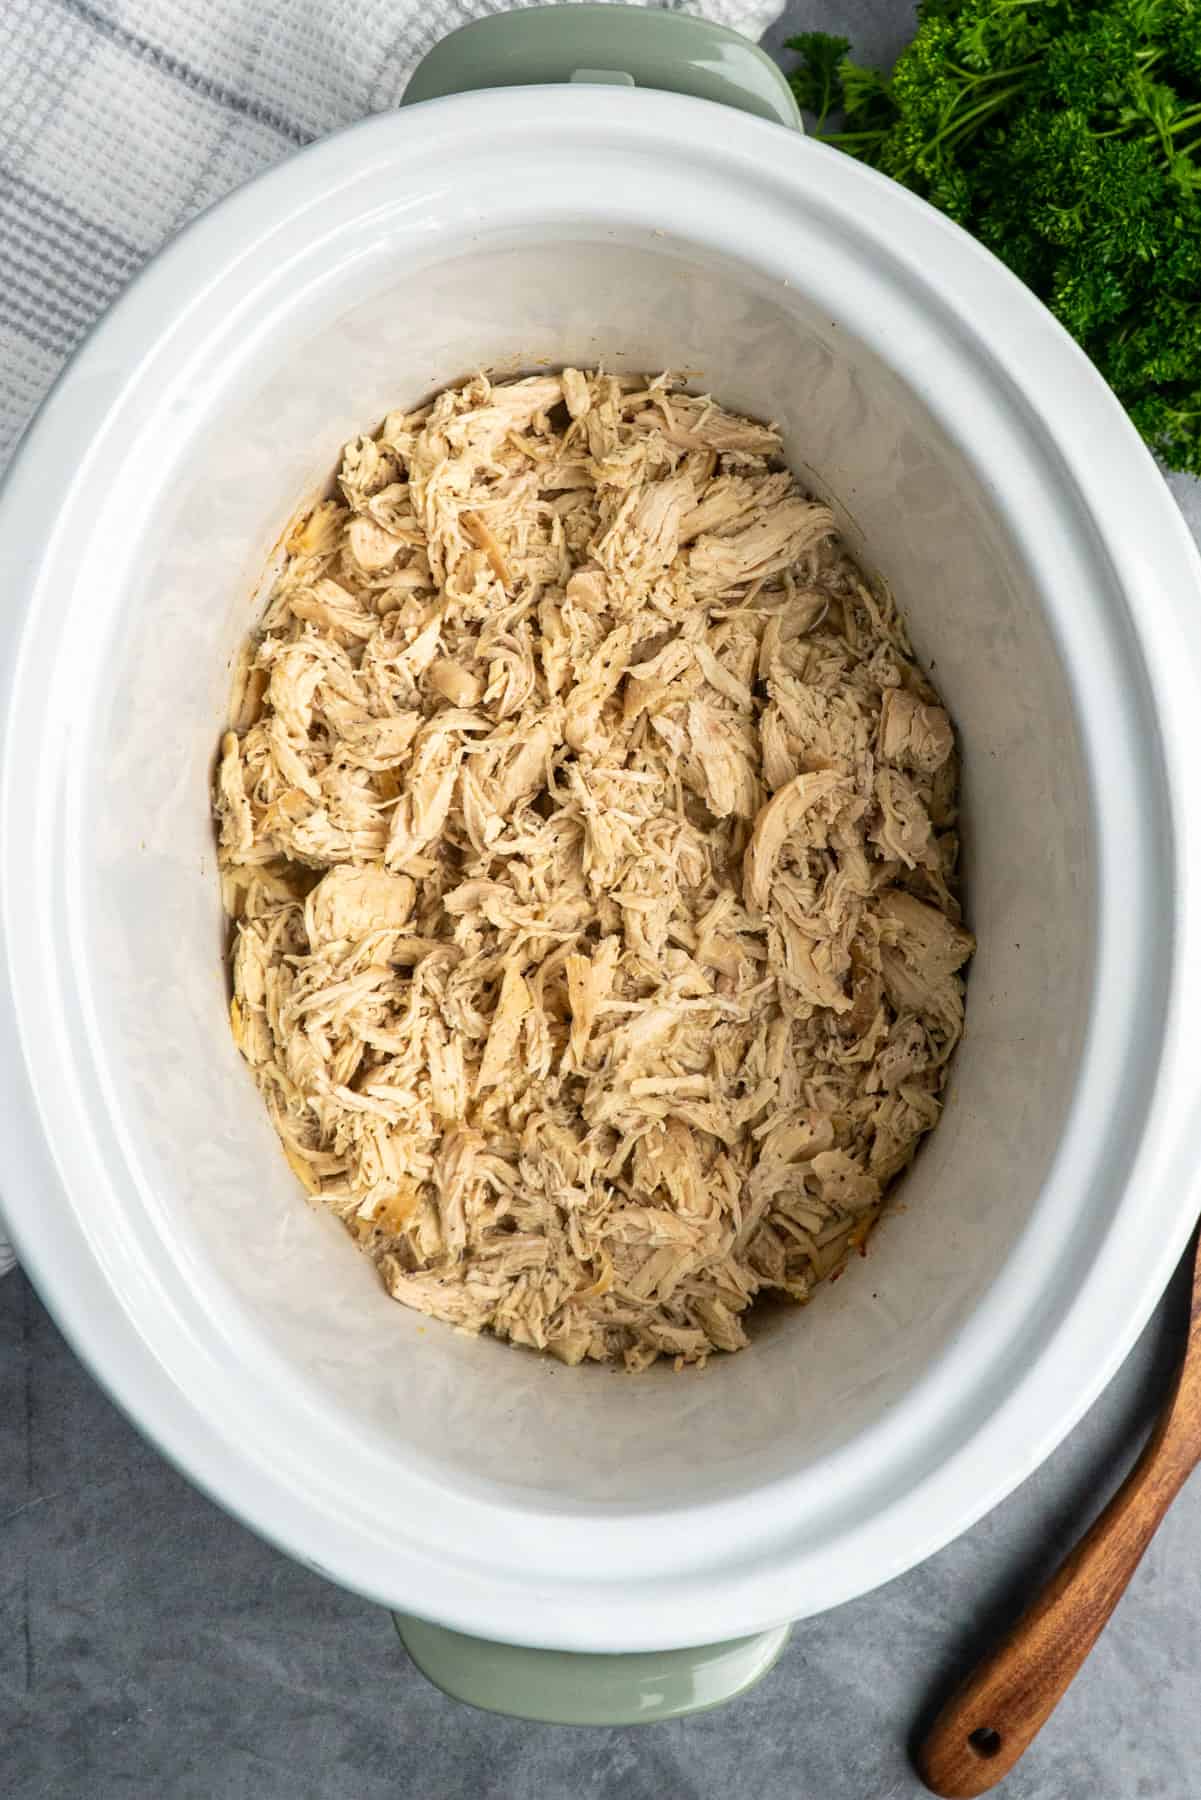 Shredded chicken breasts in a crock pot.